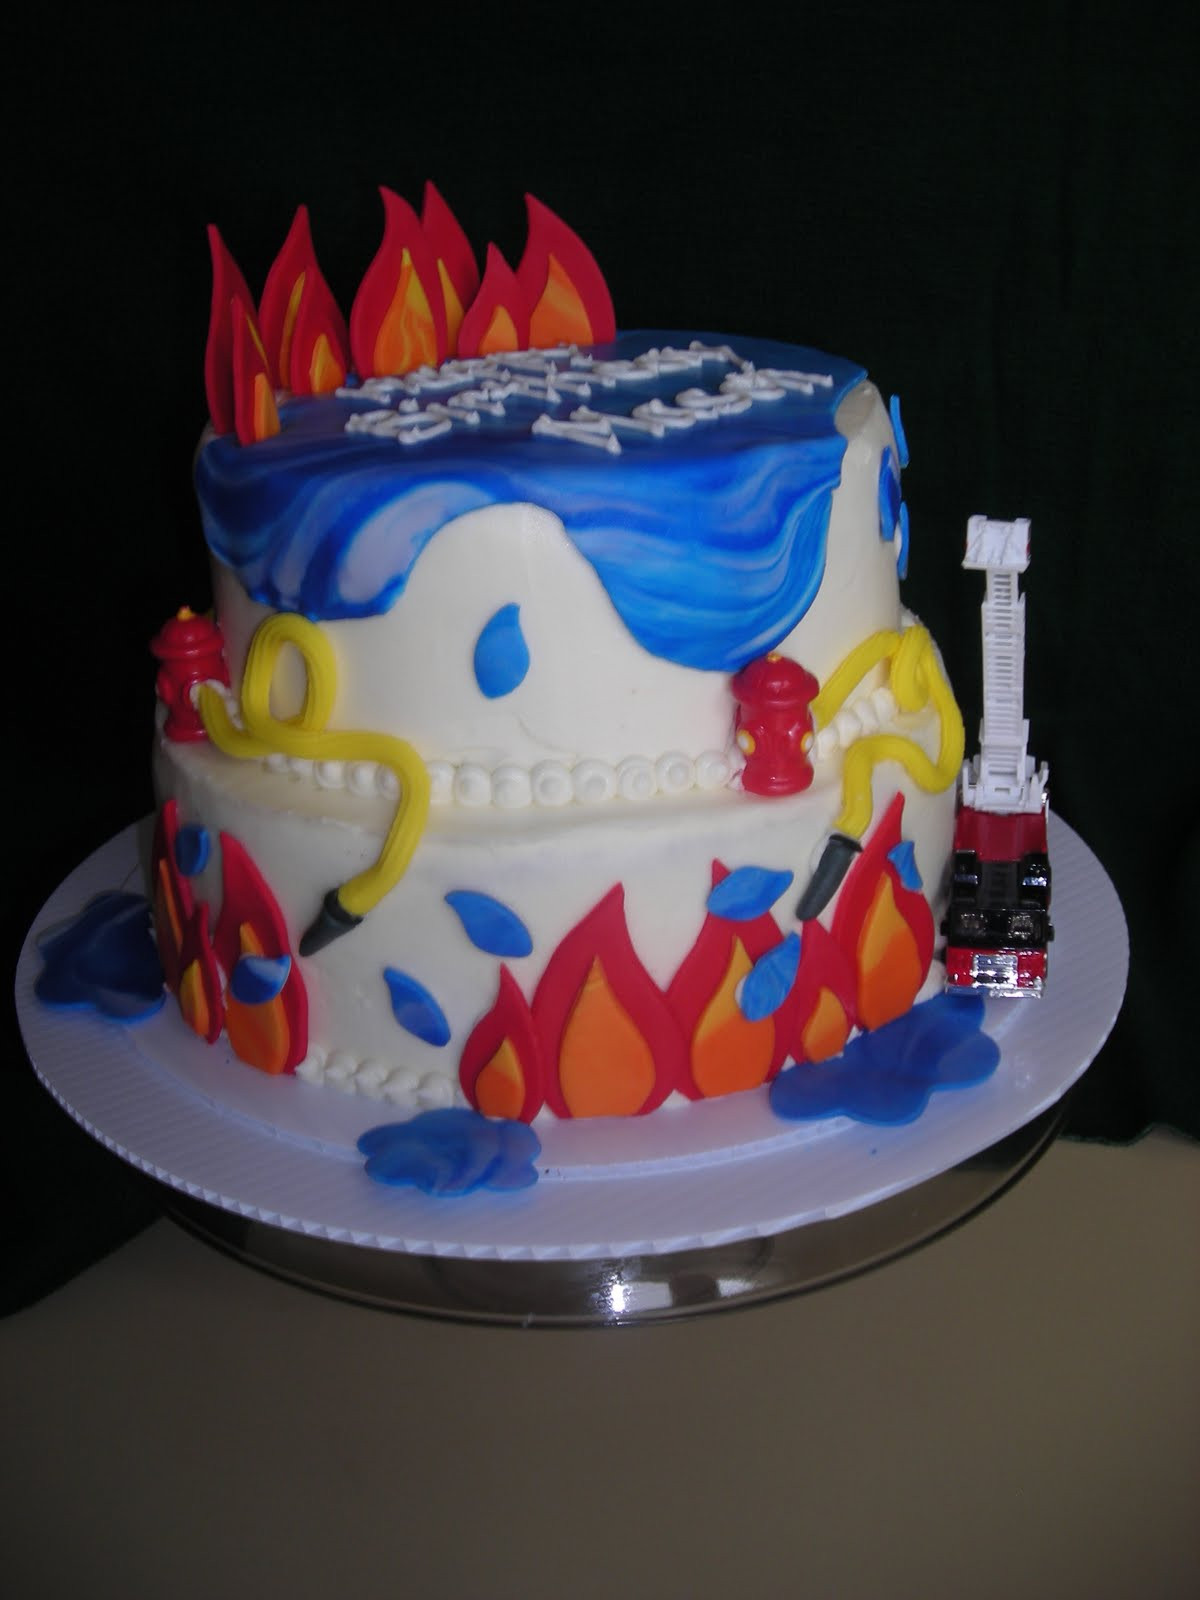 Best ideas about Firefighter Birthday Cake
. Save or Pin pattycakes Fireman Theme Birthday Cake Now.